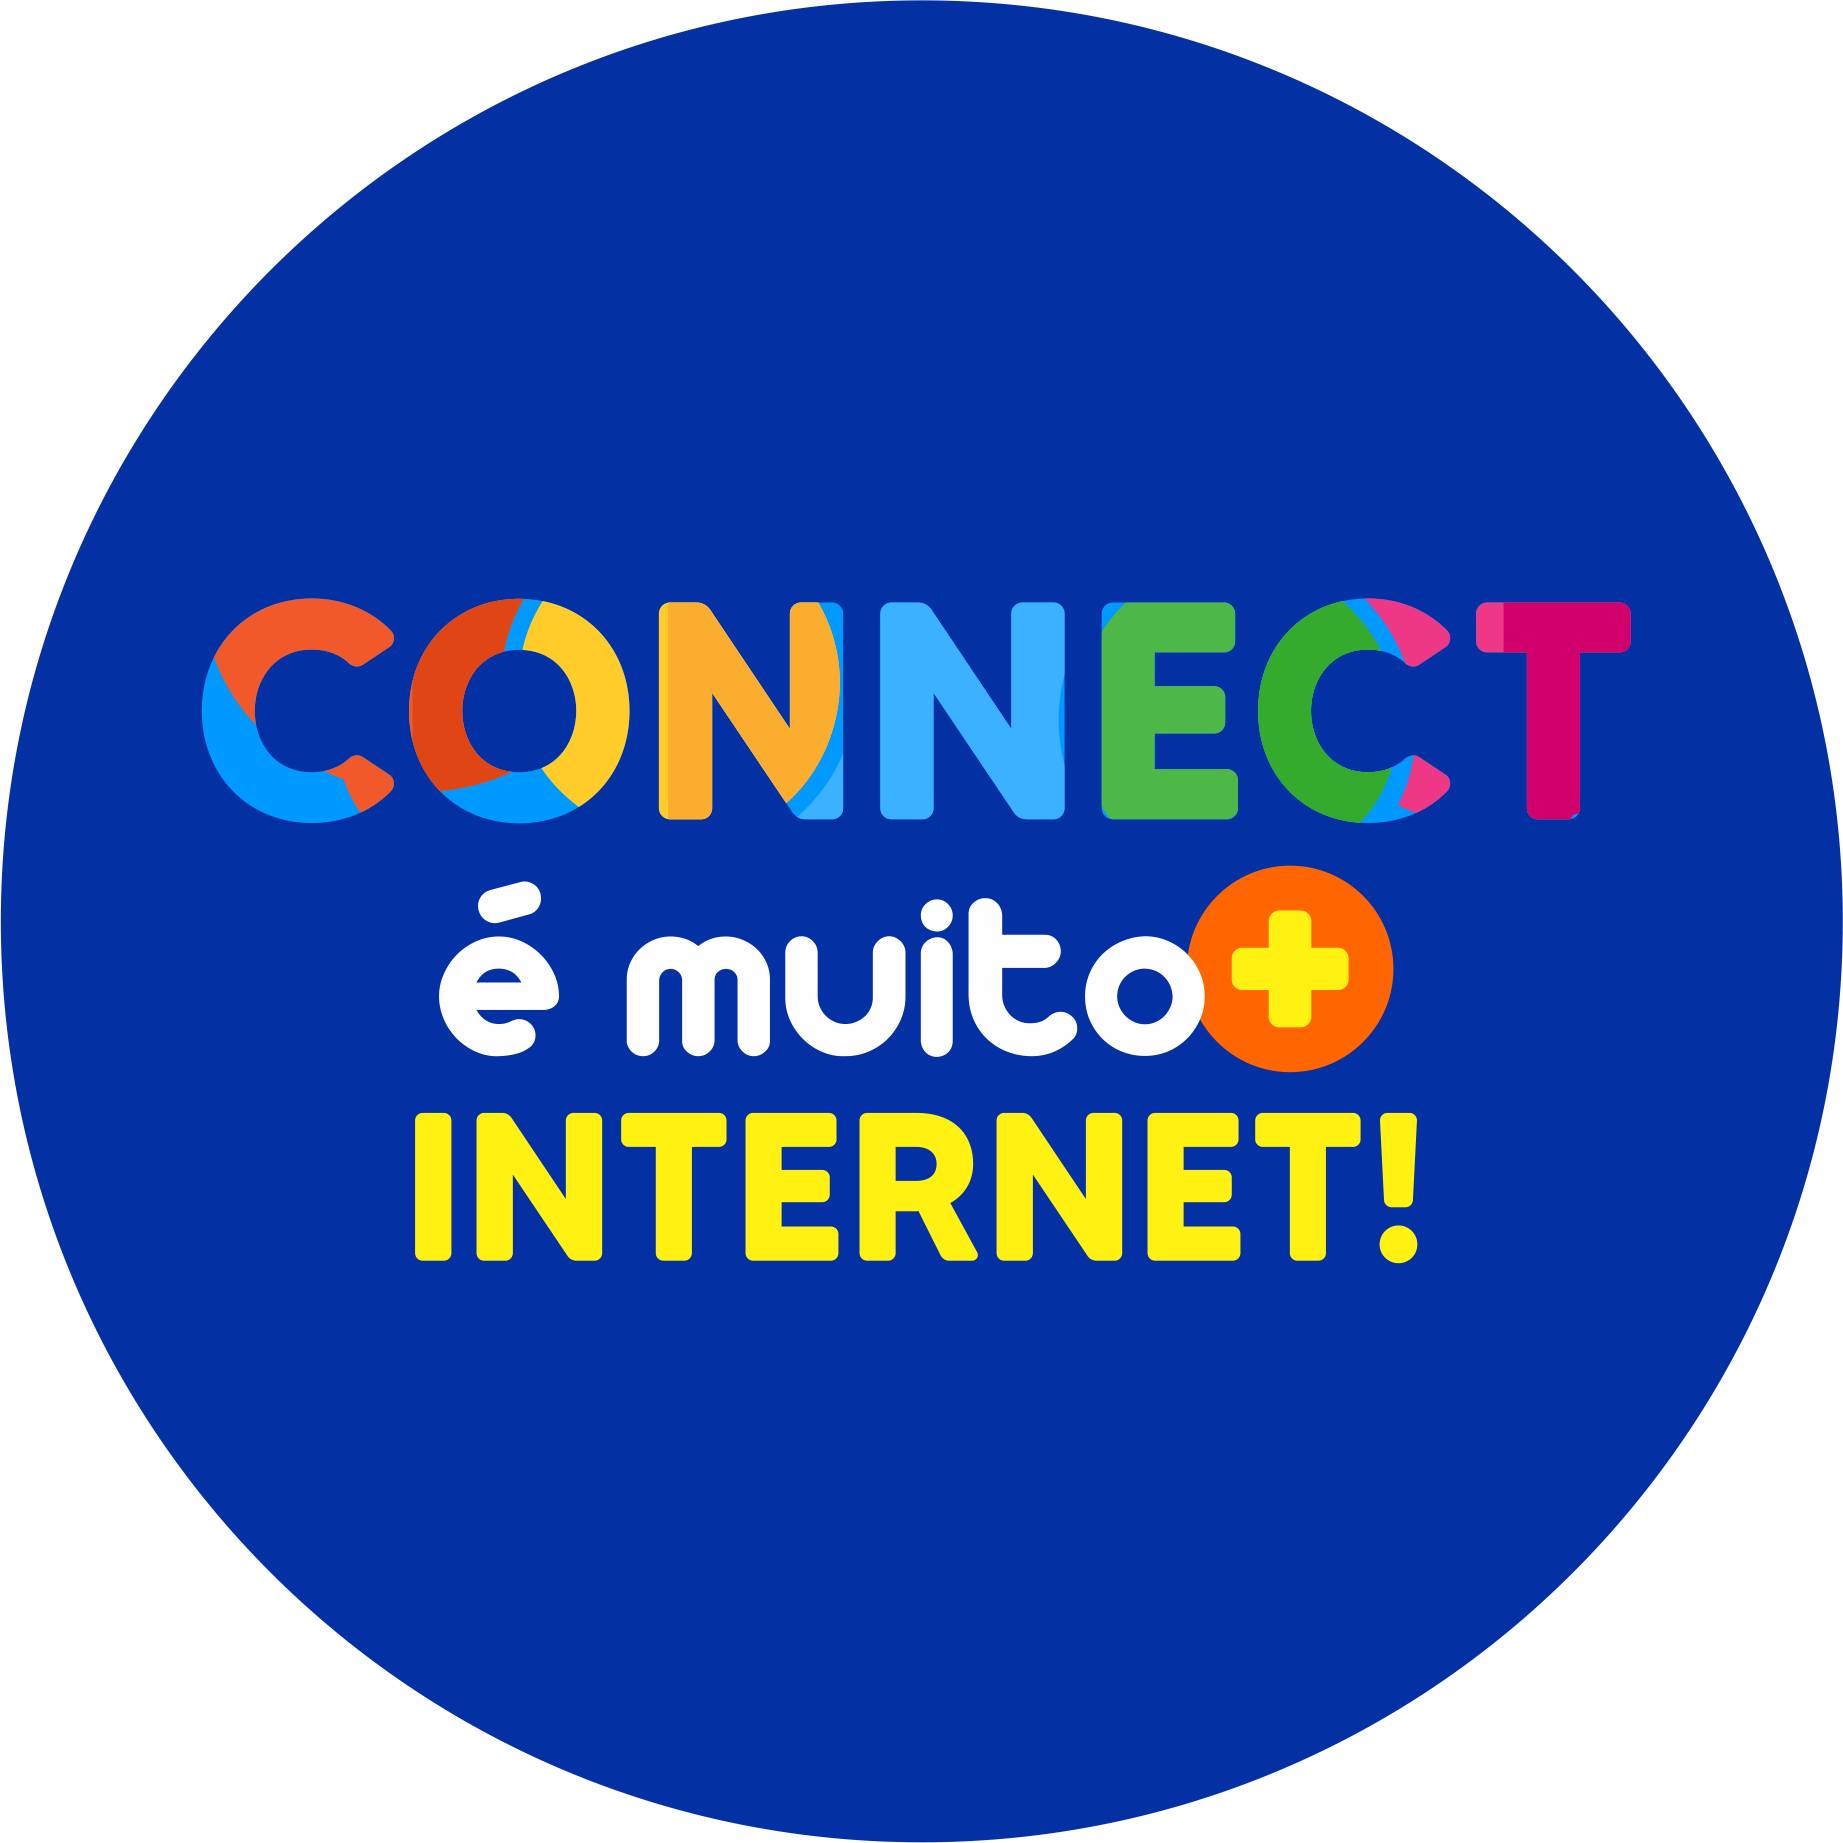 Connect internet